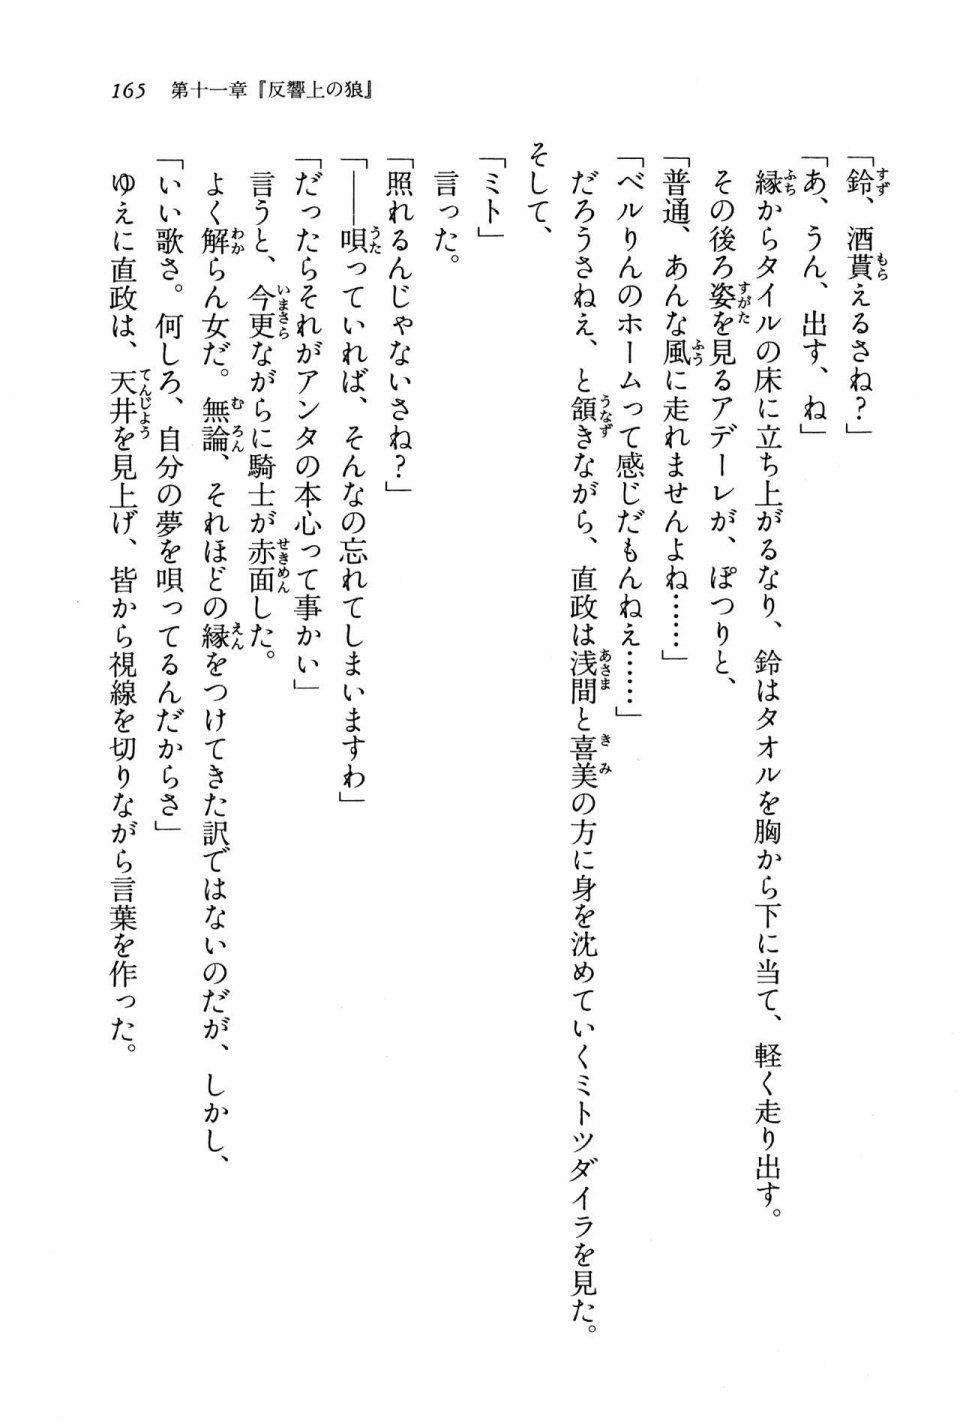 Kyoukai Senjou no Horizon BD Special Mininovel Vol 8(4B) - Photo #169